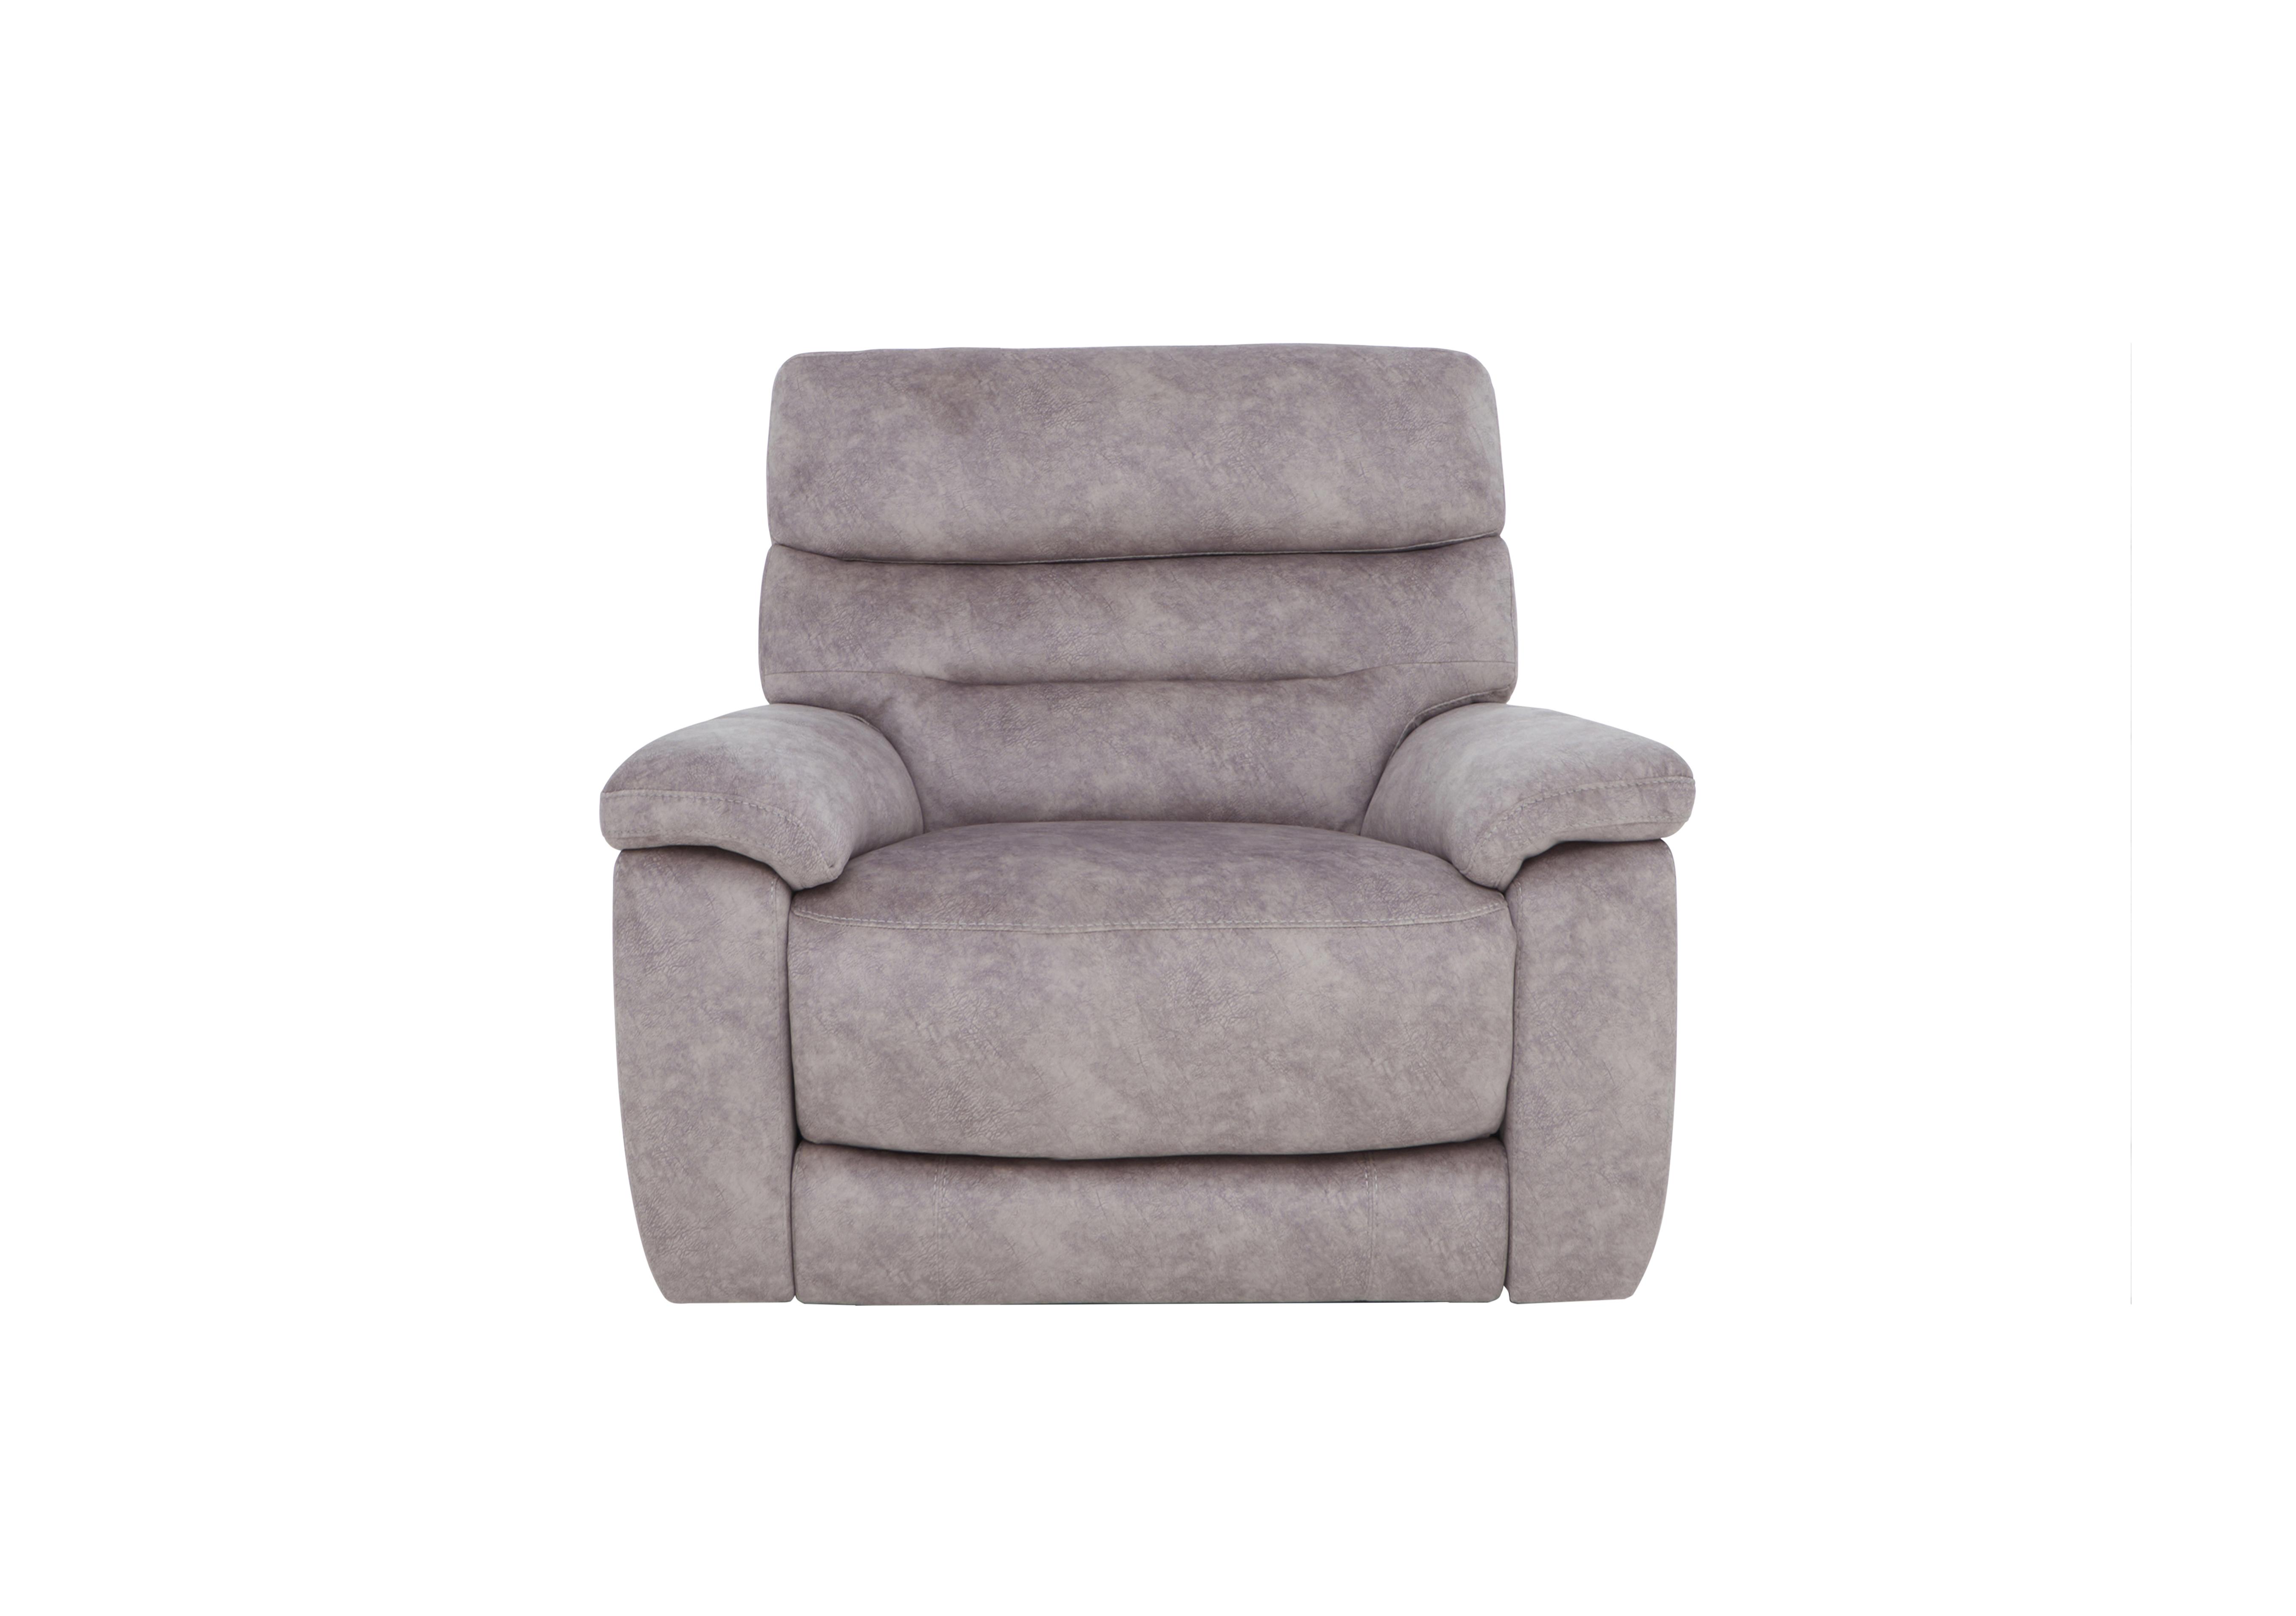 Nimbus Fabric Chair in Bfa-Bnn-R28 Grey on Furniture Village